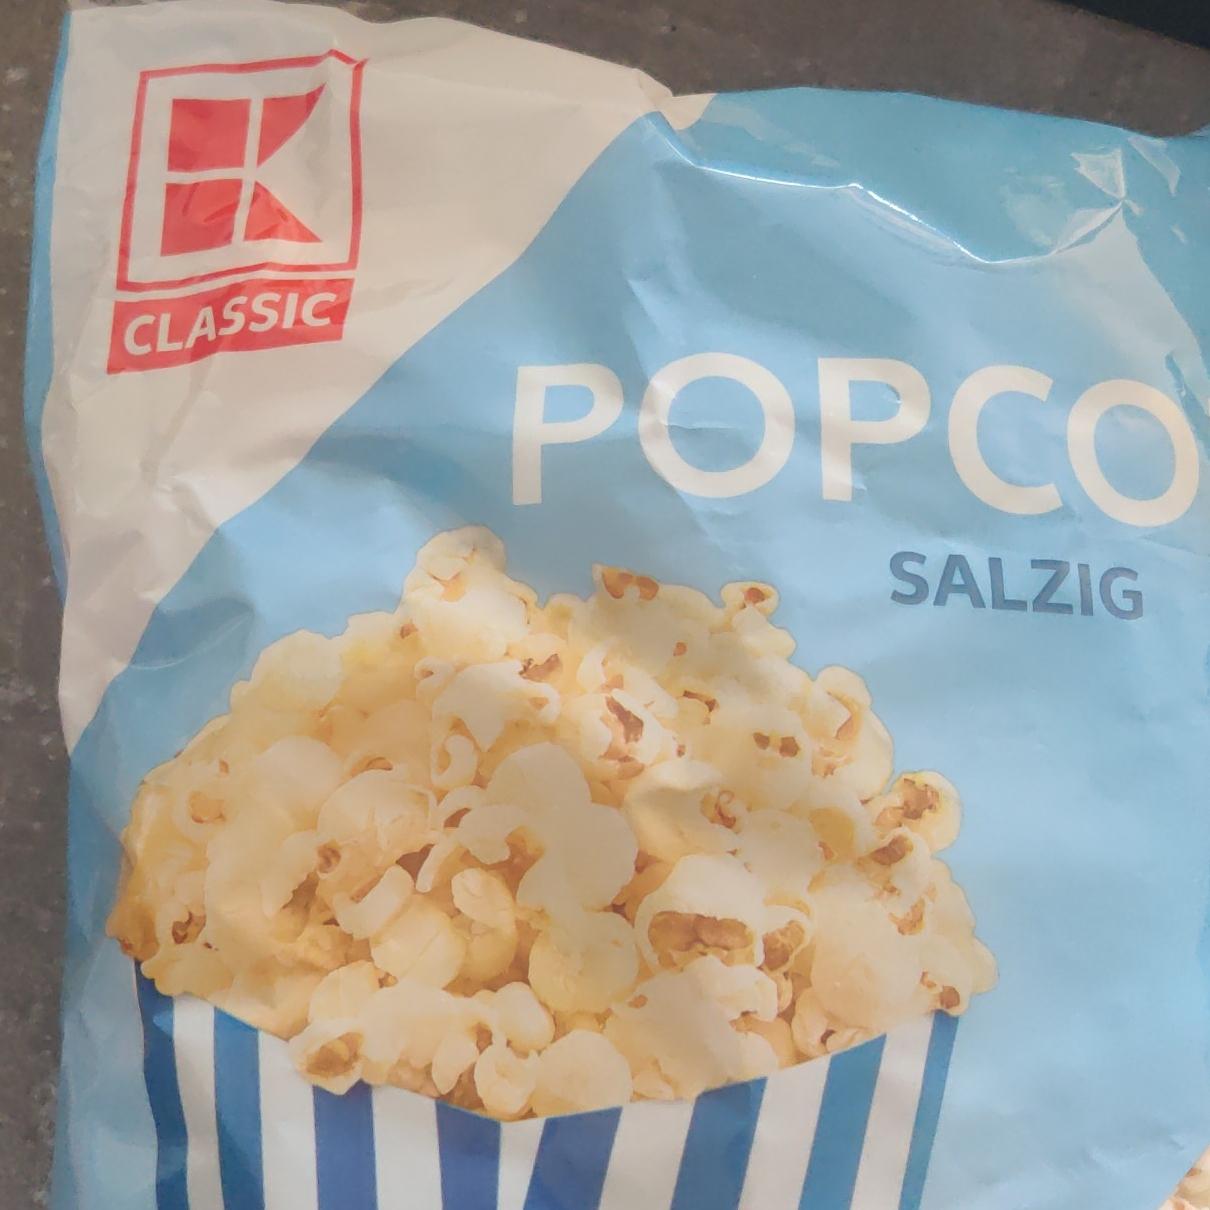 Fotografie - Popcorn salzig K-Classic